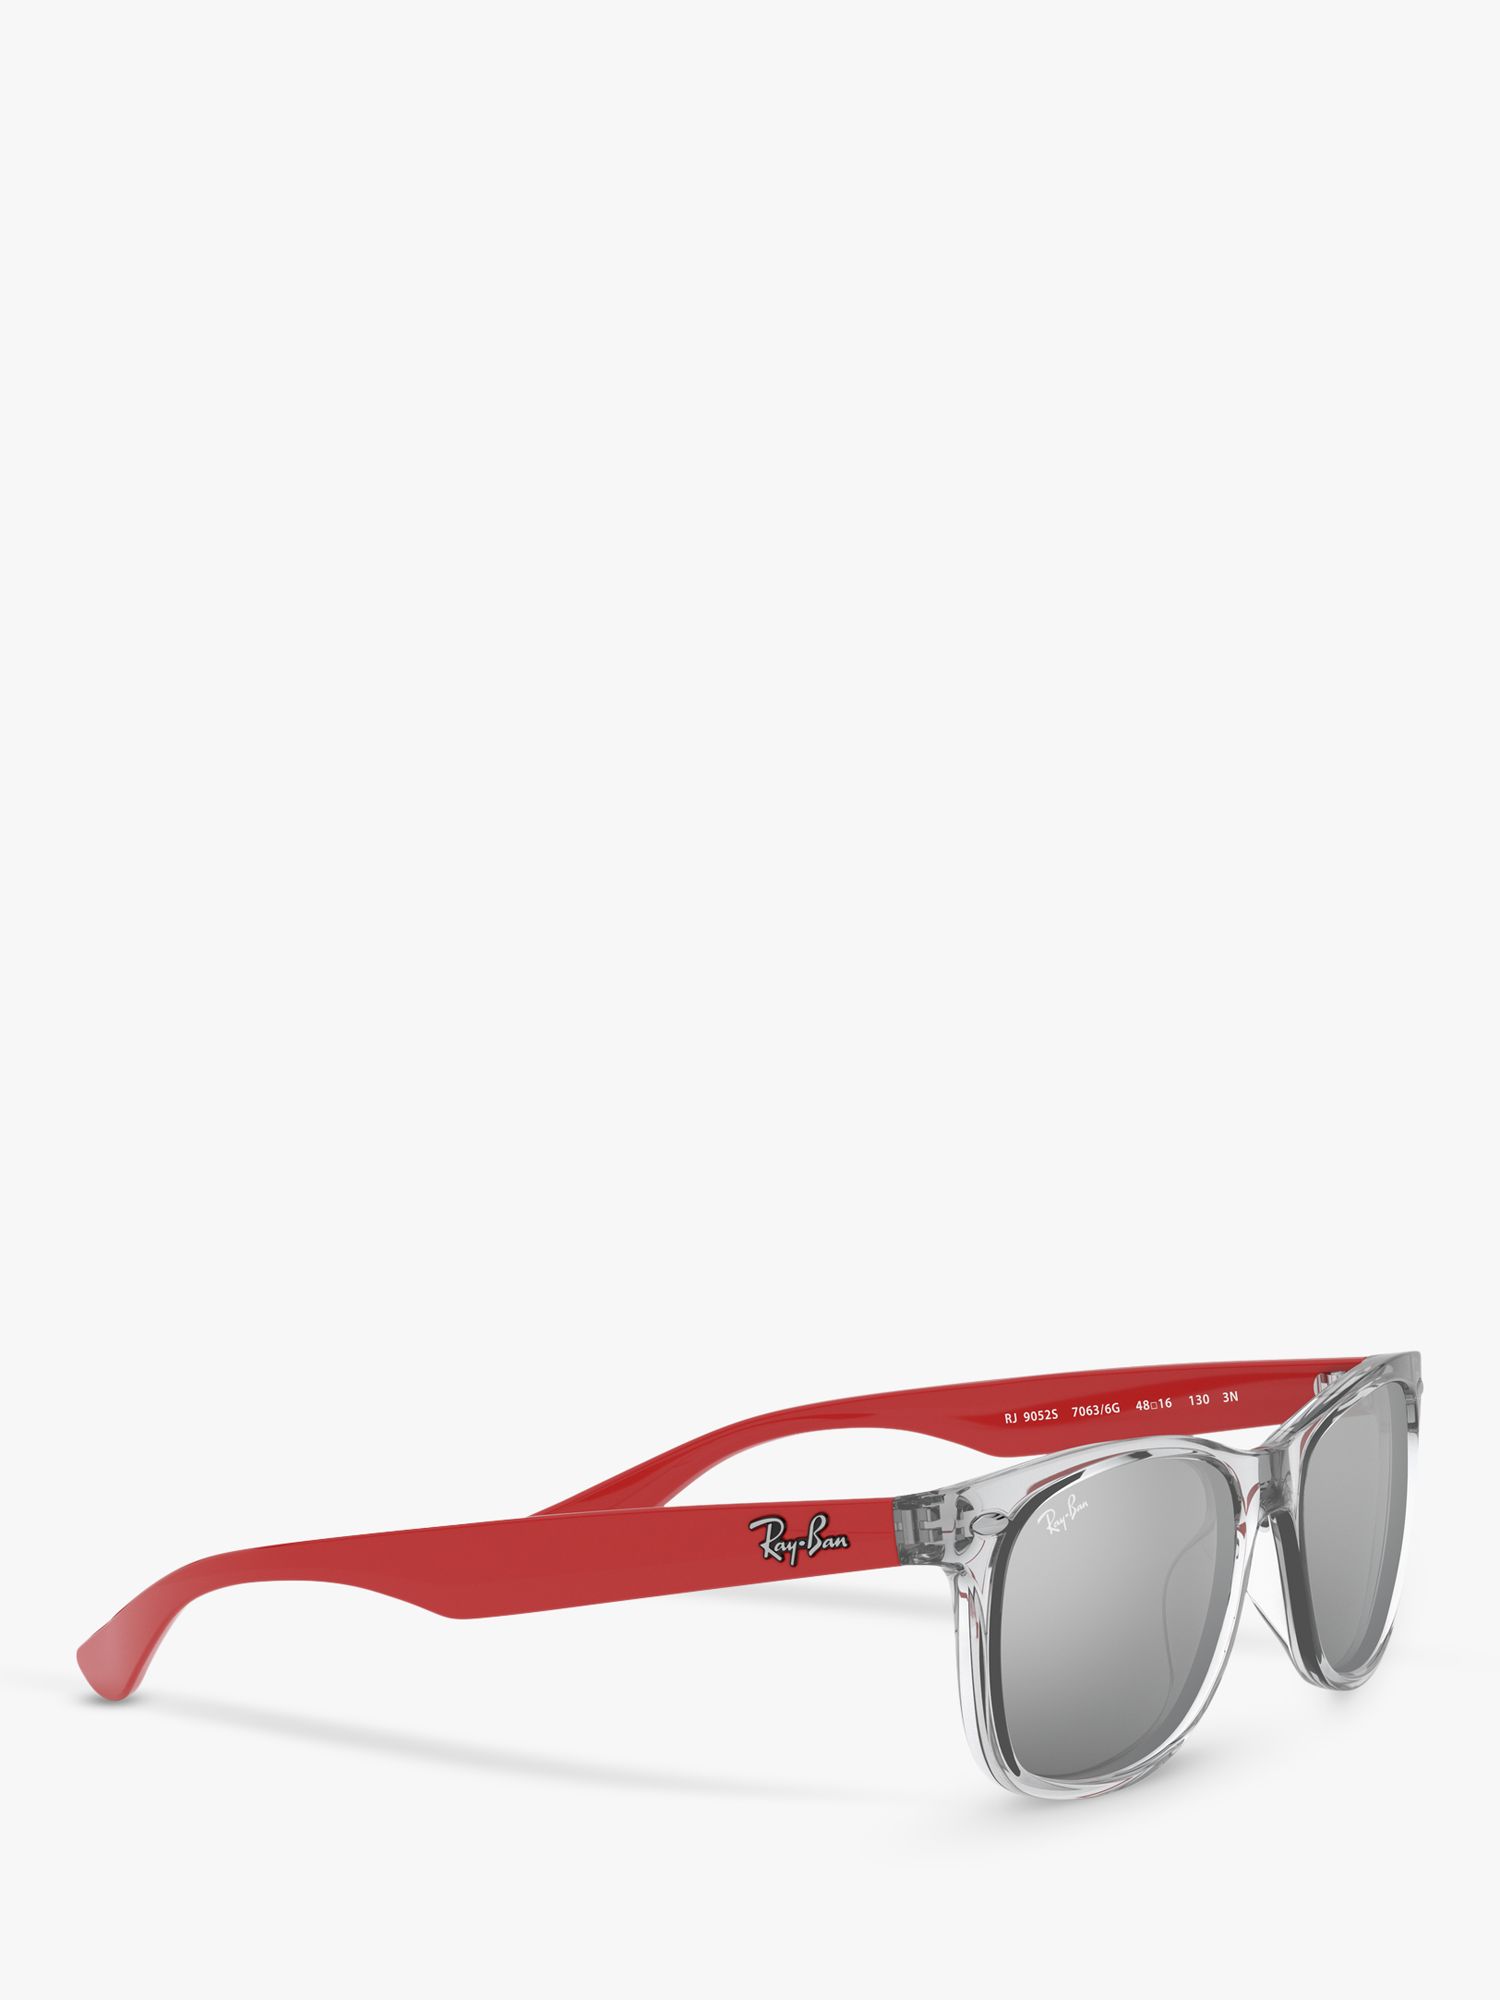 Ray-Ban RJ9052S Kids' Unisex Square Sunglasses, Transparent Grey/Mirror Grey